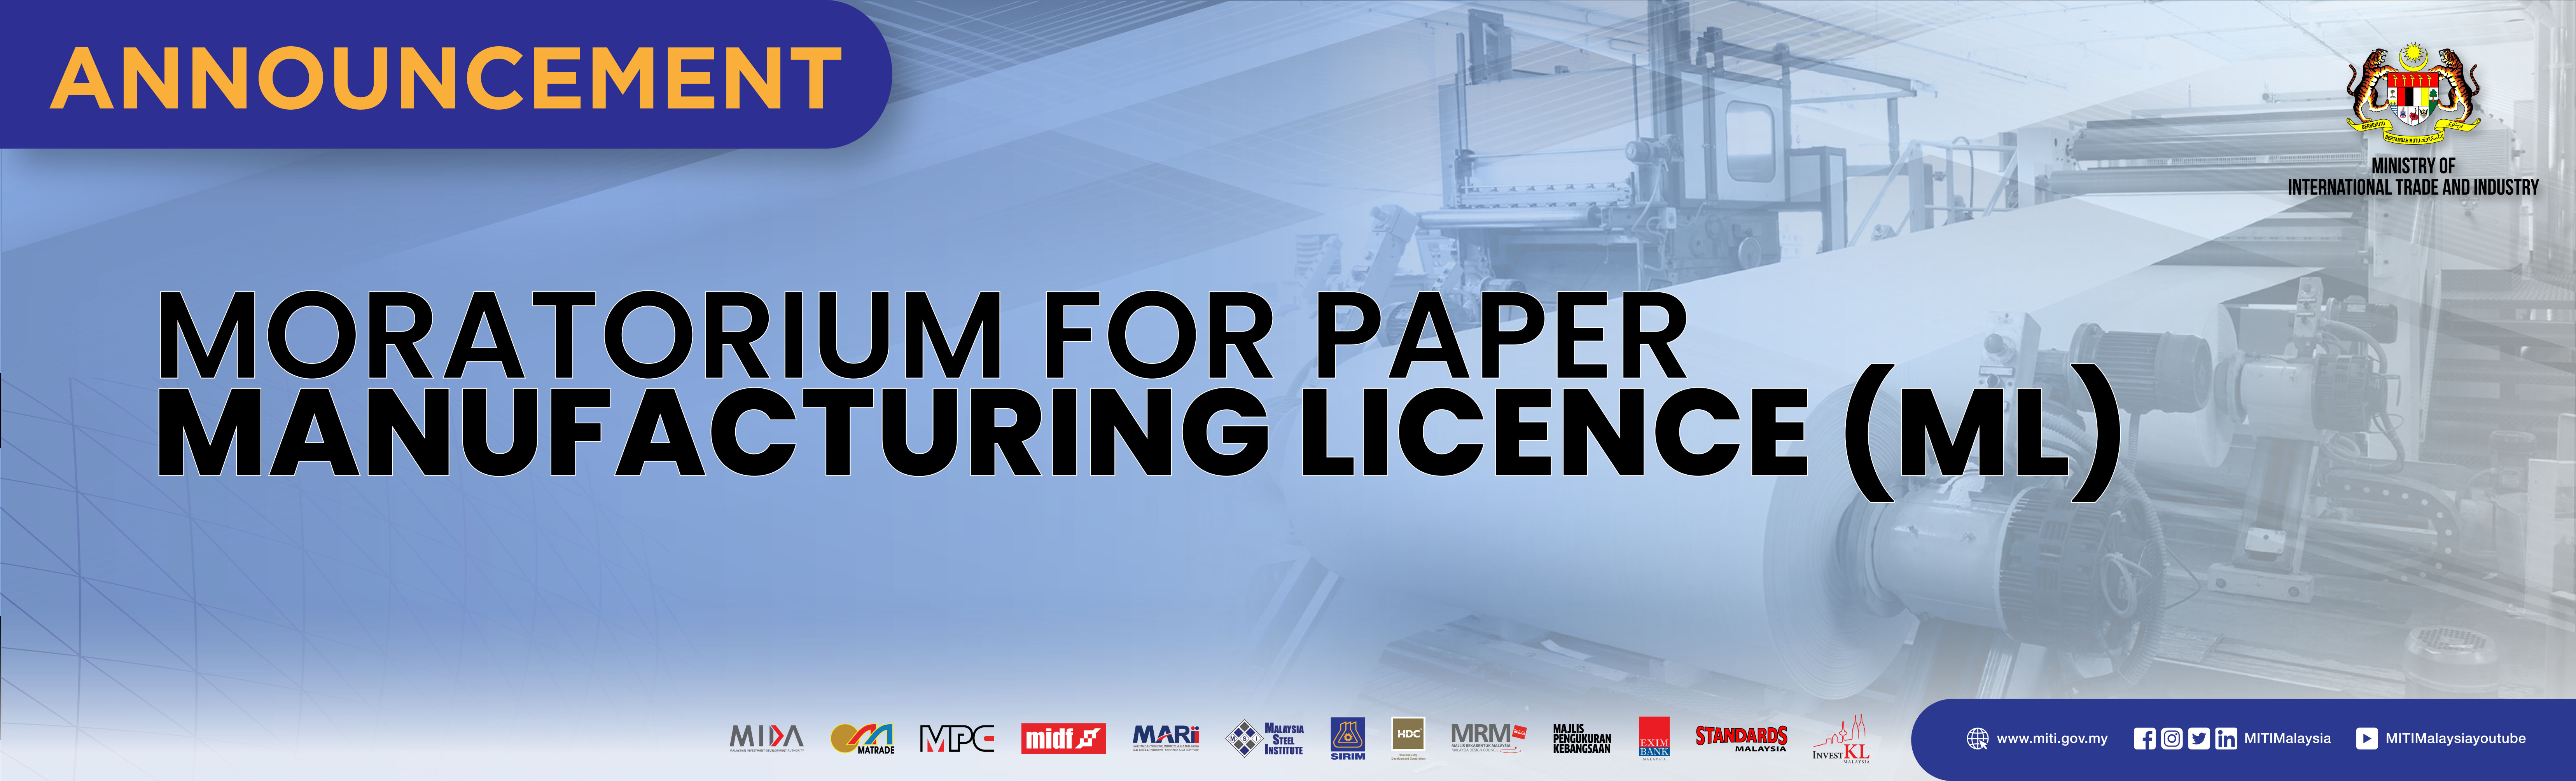 Moratarium for Paper Manufacturing Licence (ML)